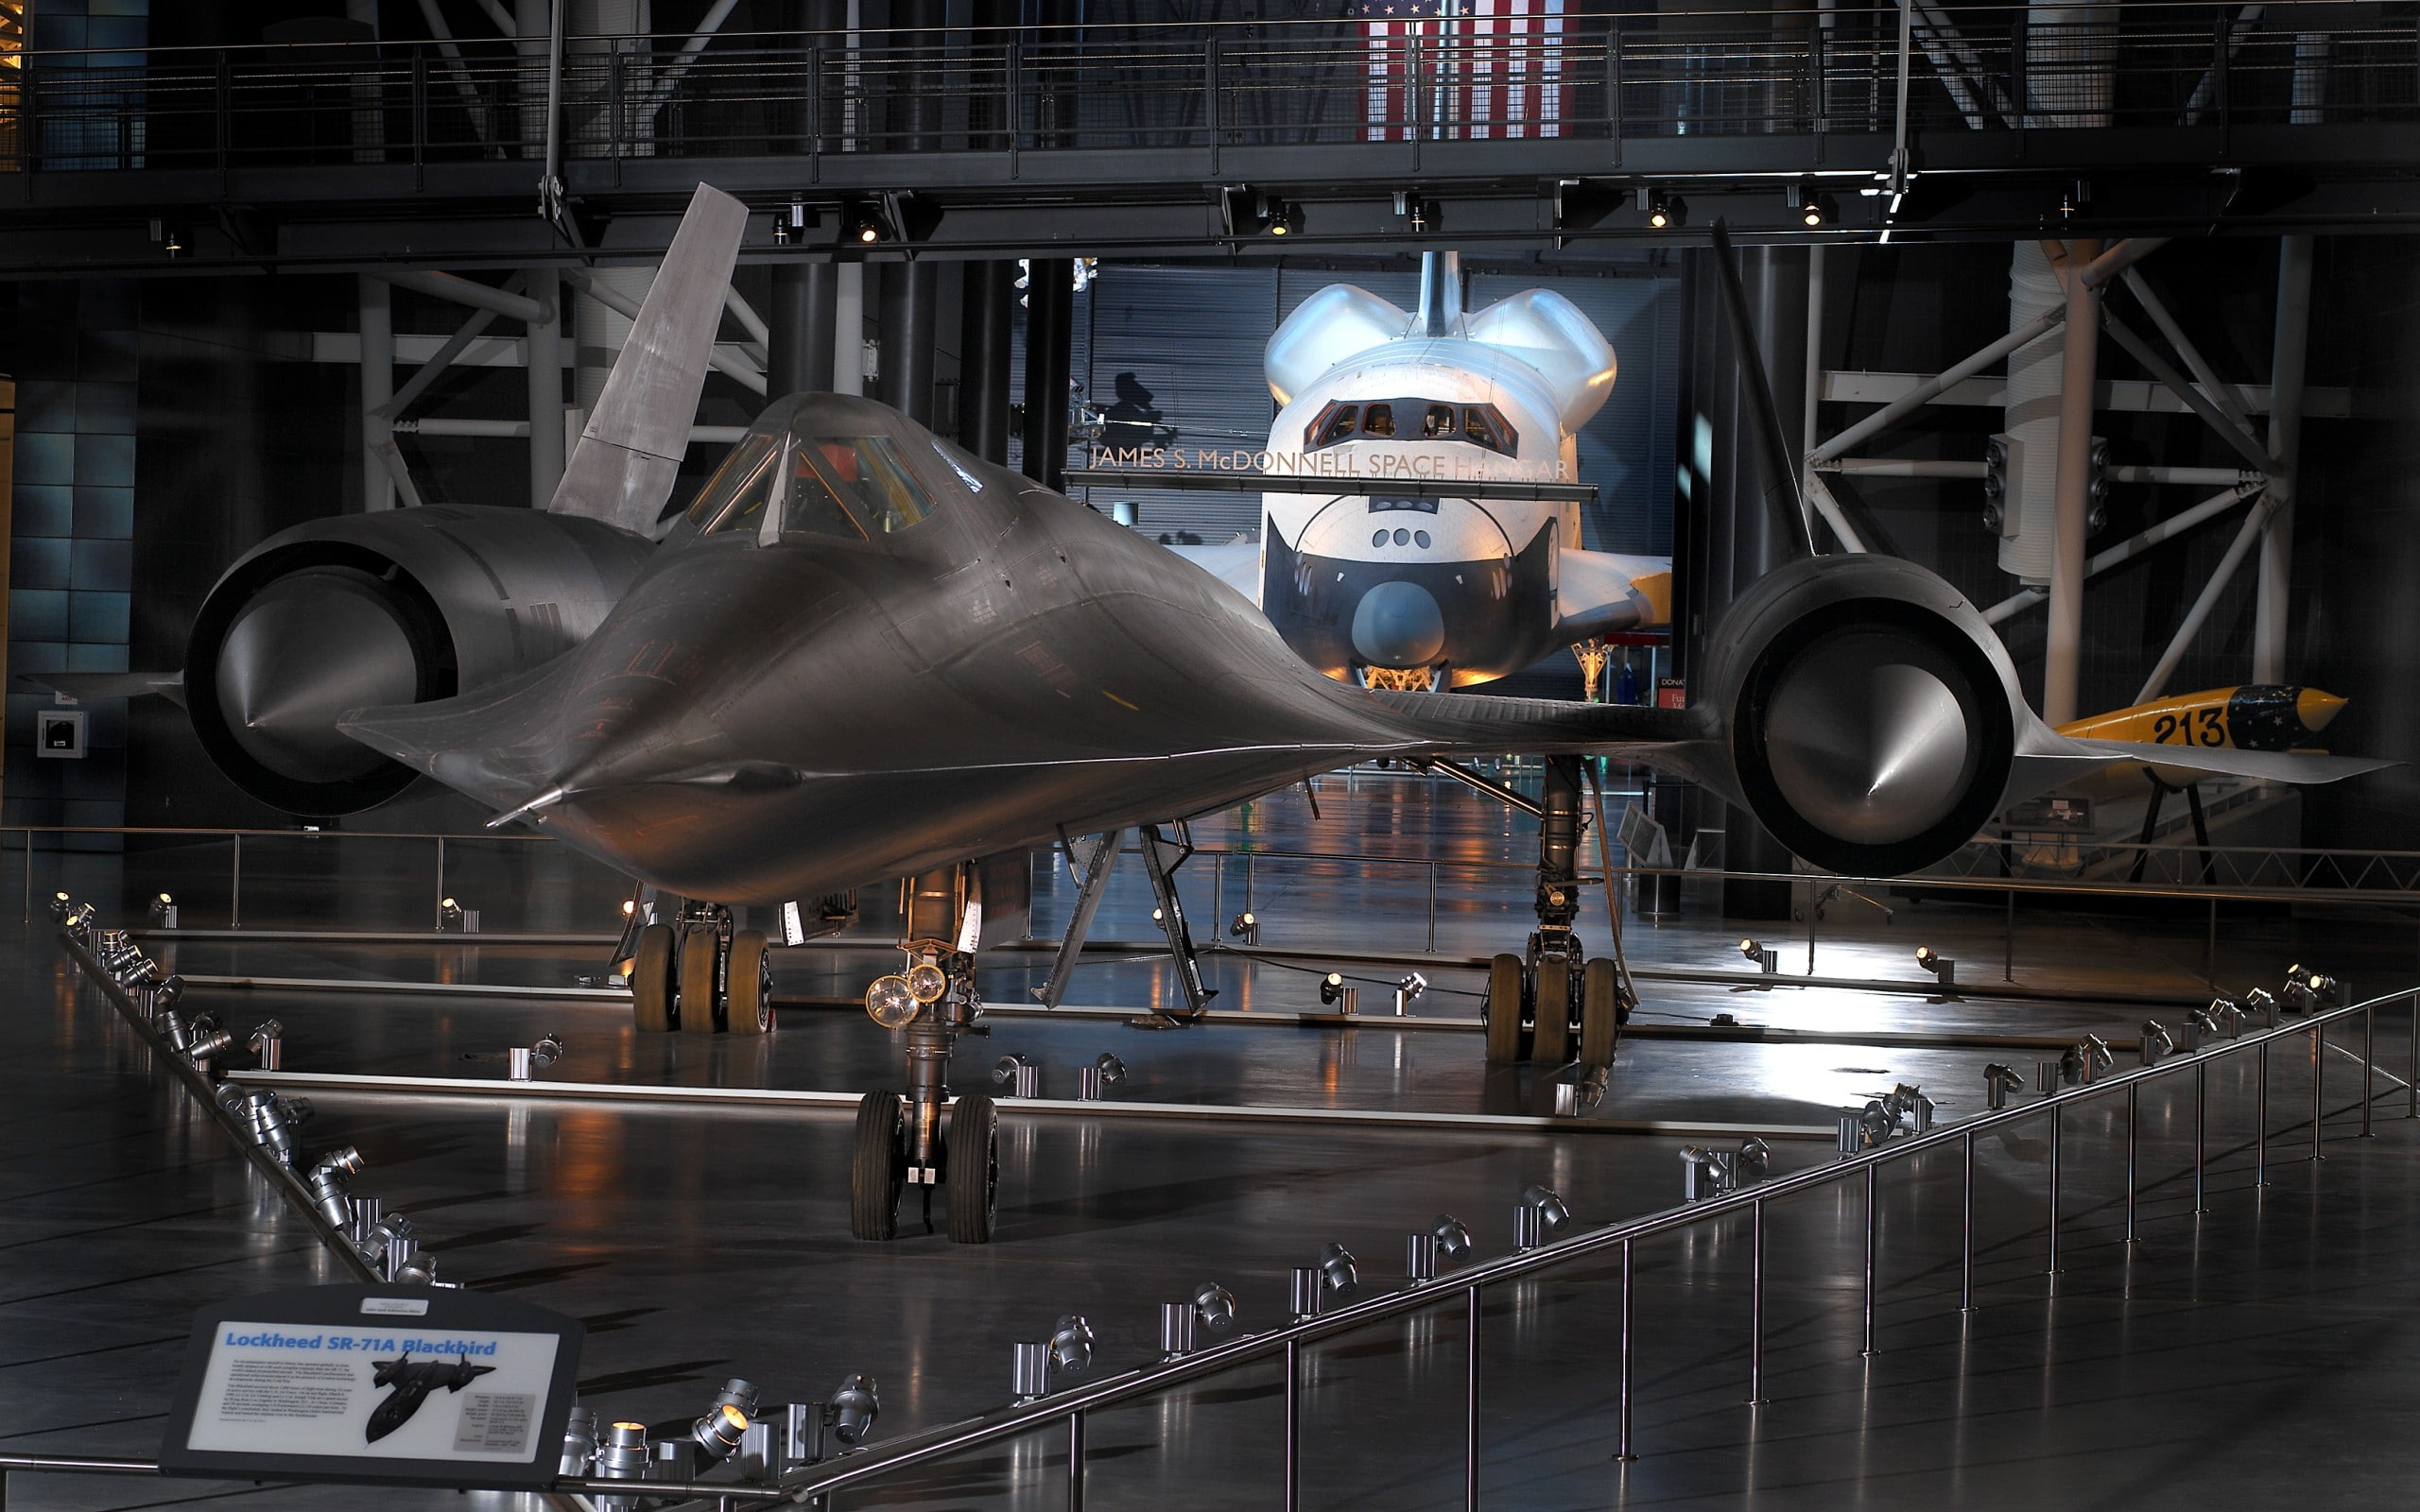 military aircraft, Lockheed SR-71 Blackbird, space shuttle